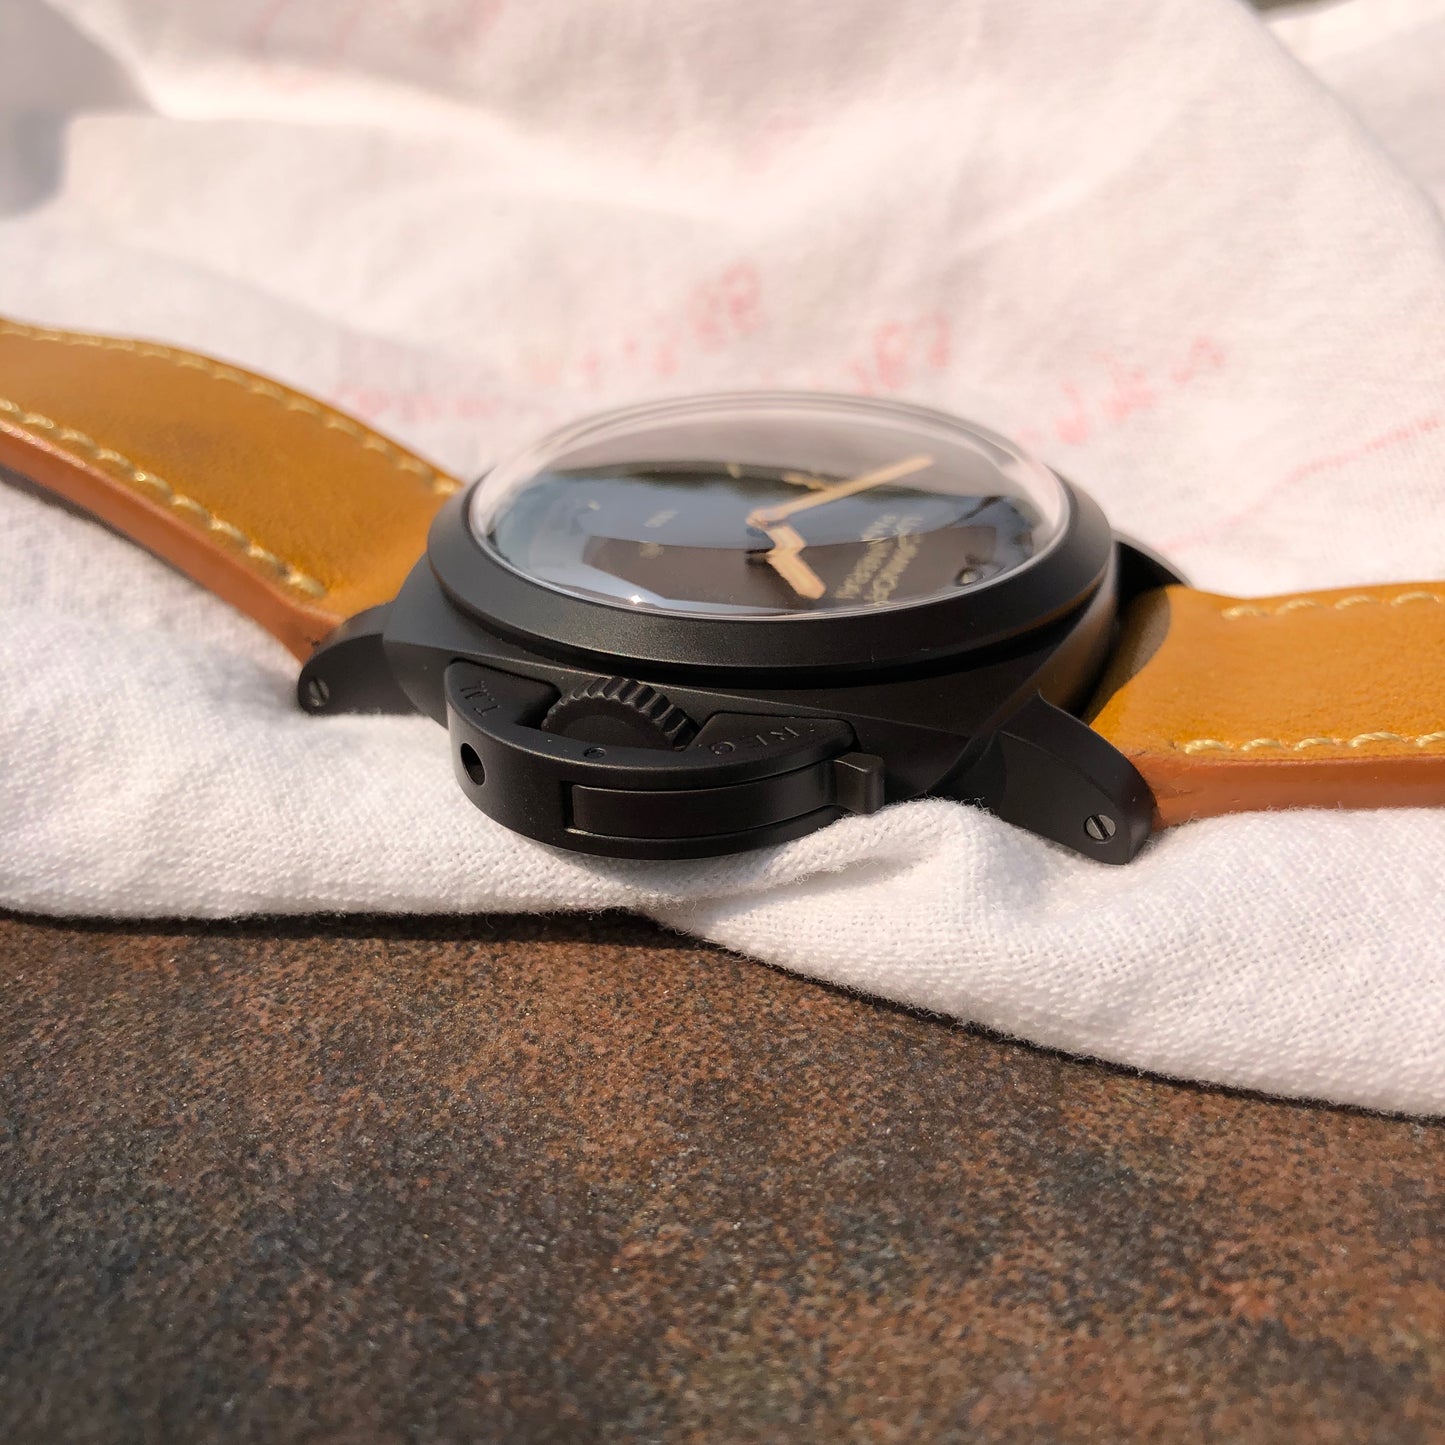 Panerai Luminor 1950 Composite 3 Days PAM 375 47mm Ceramic Wristwatch Box Papers - Hashtag Watch Company